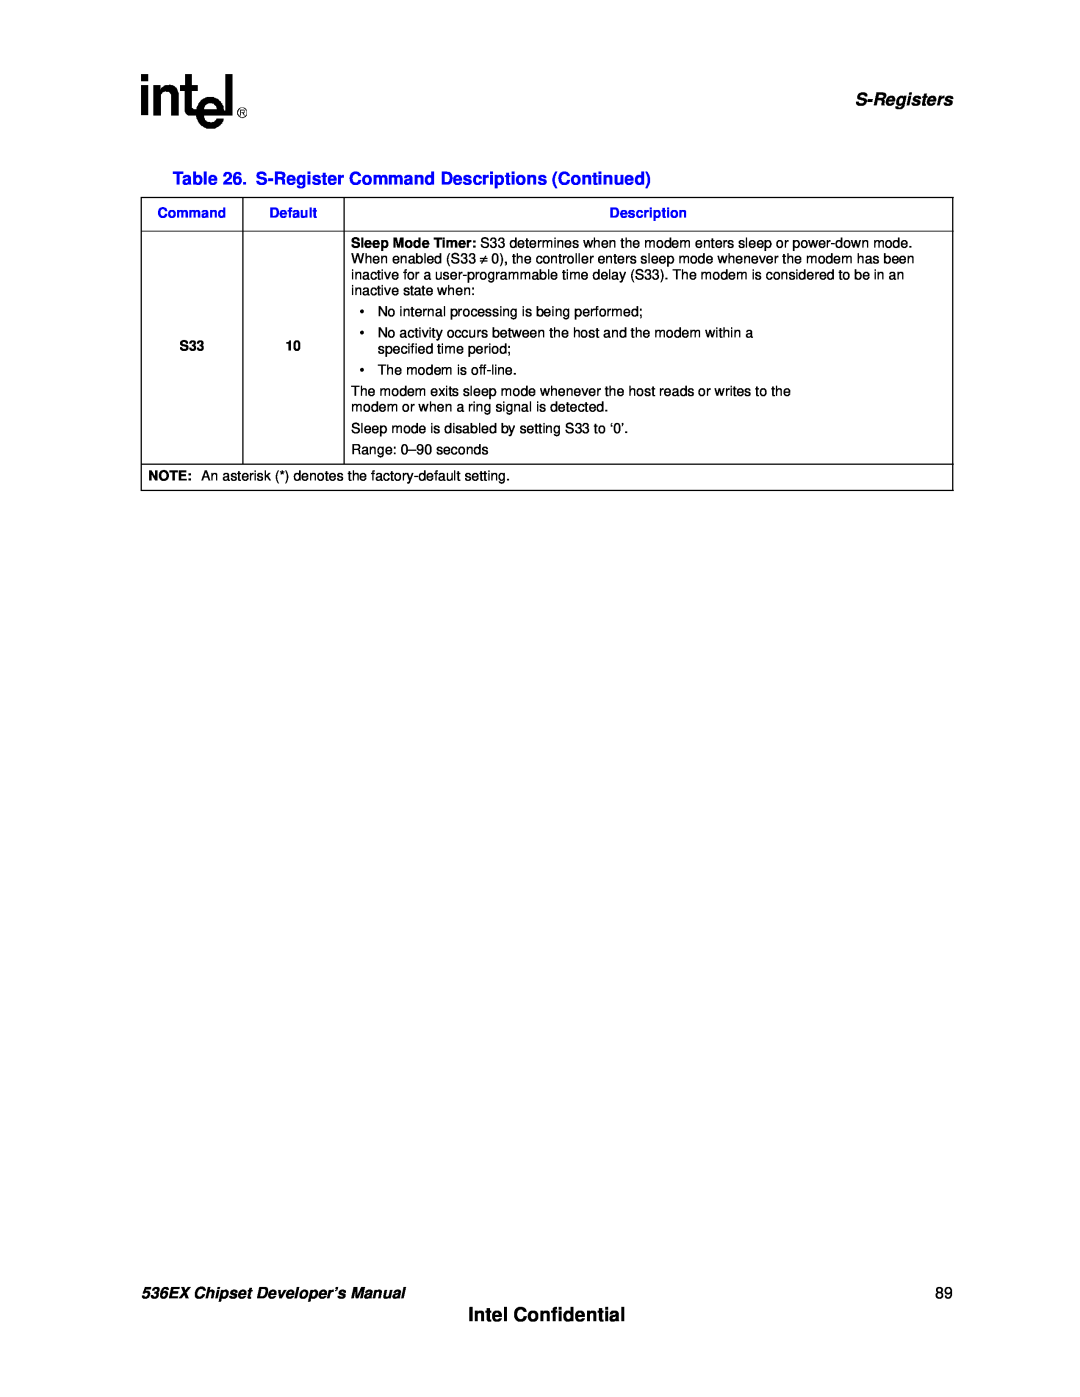 Intel 537EX manual Intel Confidential, S-Registers, 536EX Chipset Developer’s Manual 